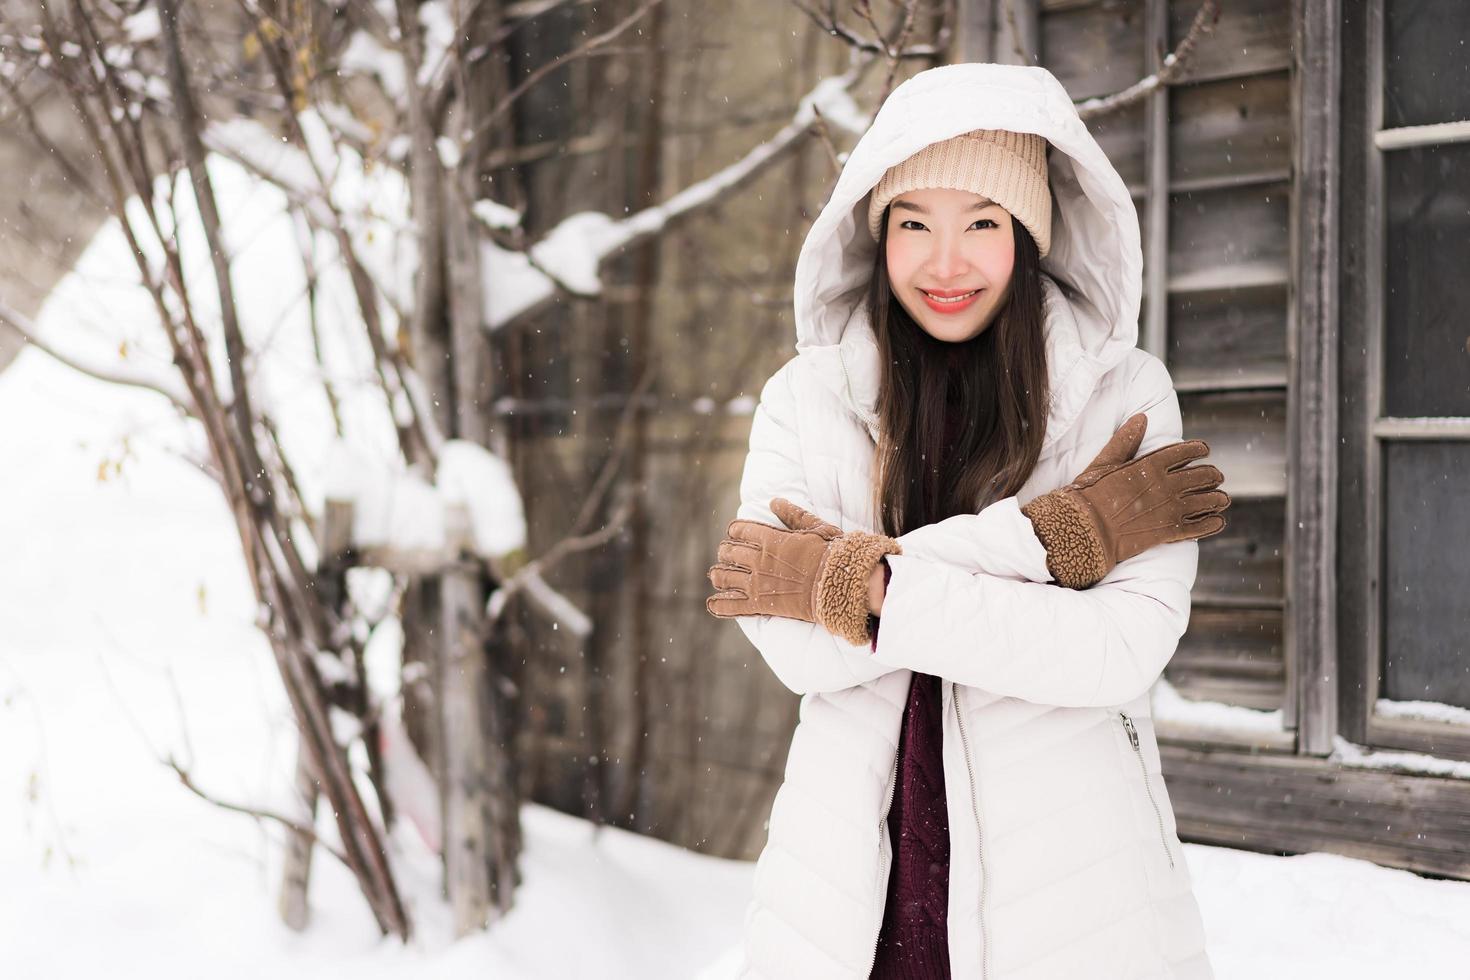 bela jovem asiática sorrindo feliz por viajar na neve, inverno foto